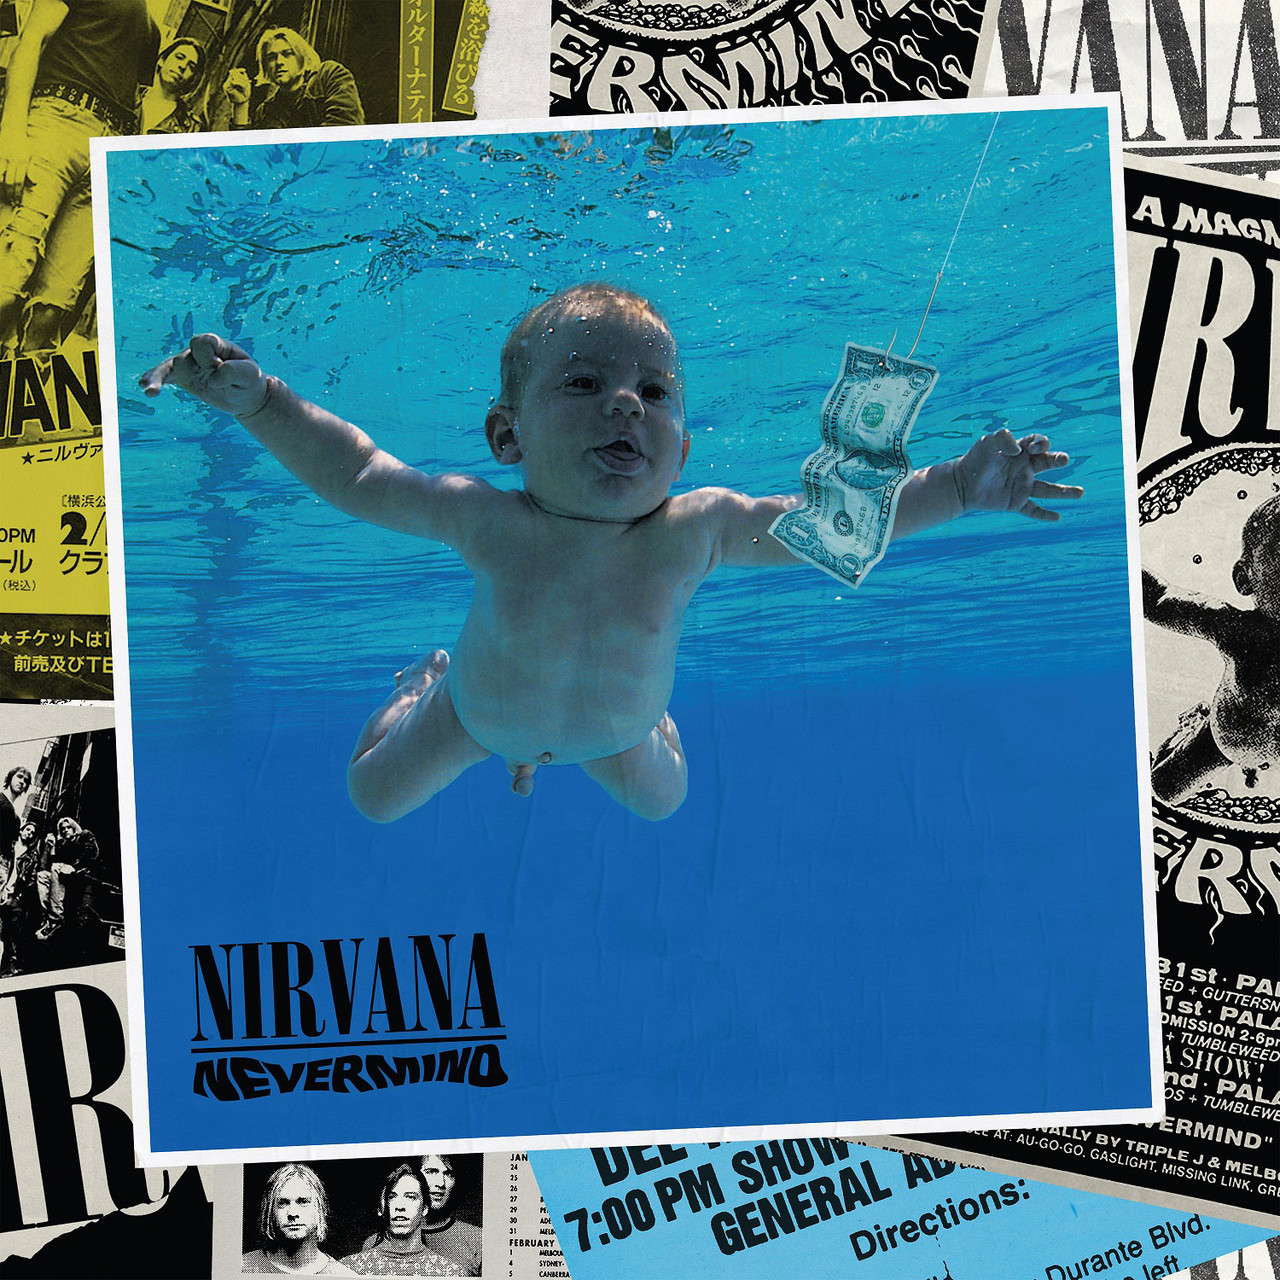 Nirvana - Nevermind: 30th Anniversary (180g Import Vinyl LP + 7) * * * -  Music Direct